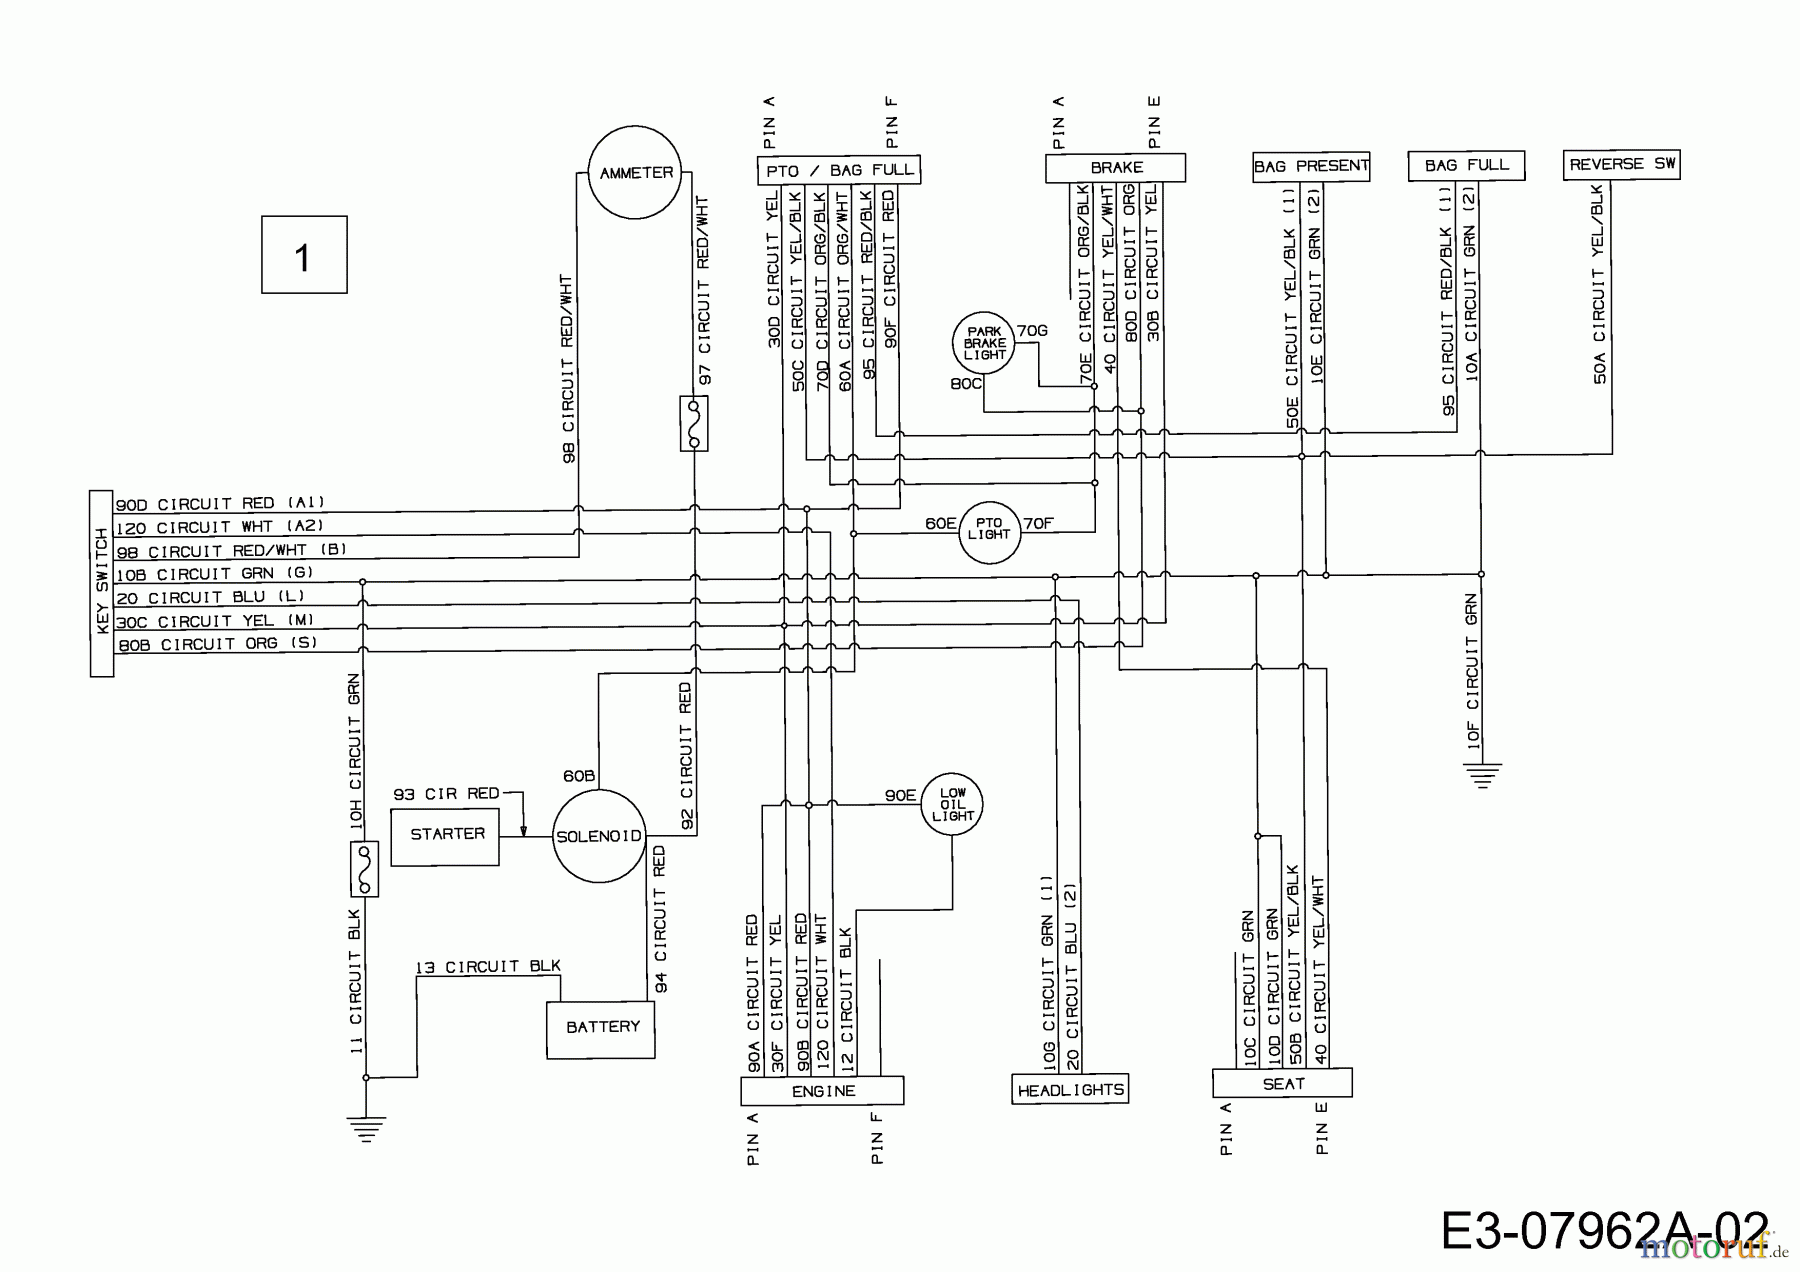  Yard-Man Lawn tractors HG 5175 13AD514G643  (2002) Wiring diagram